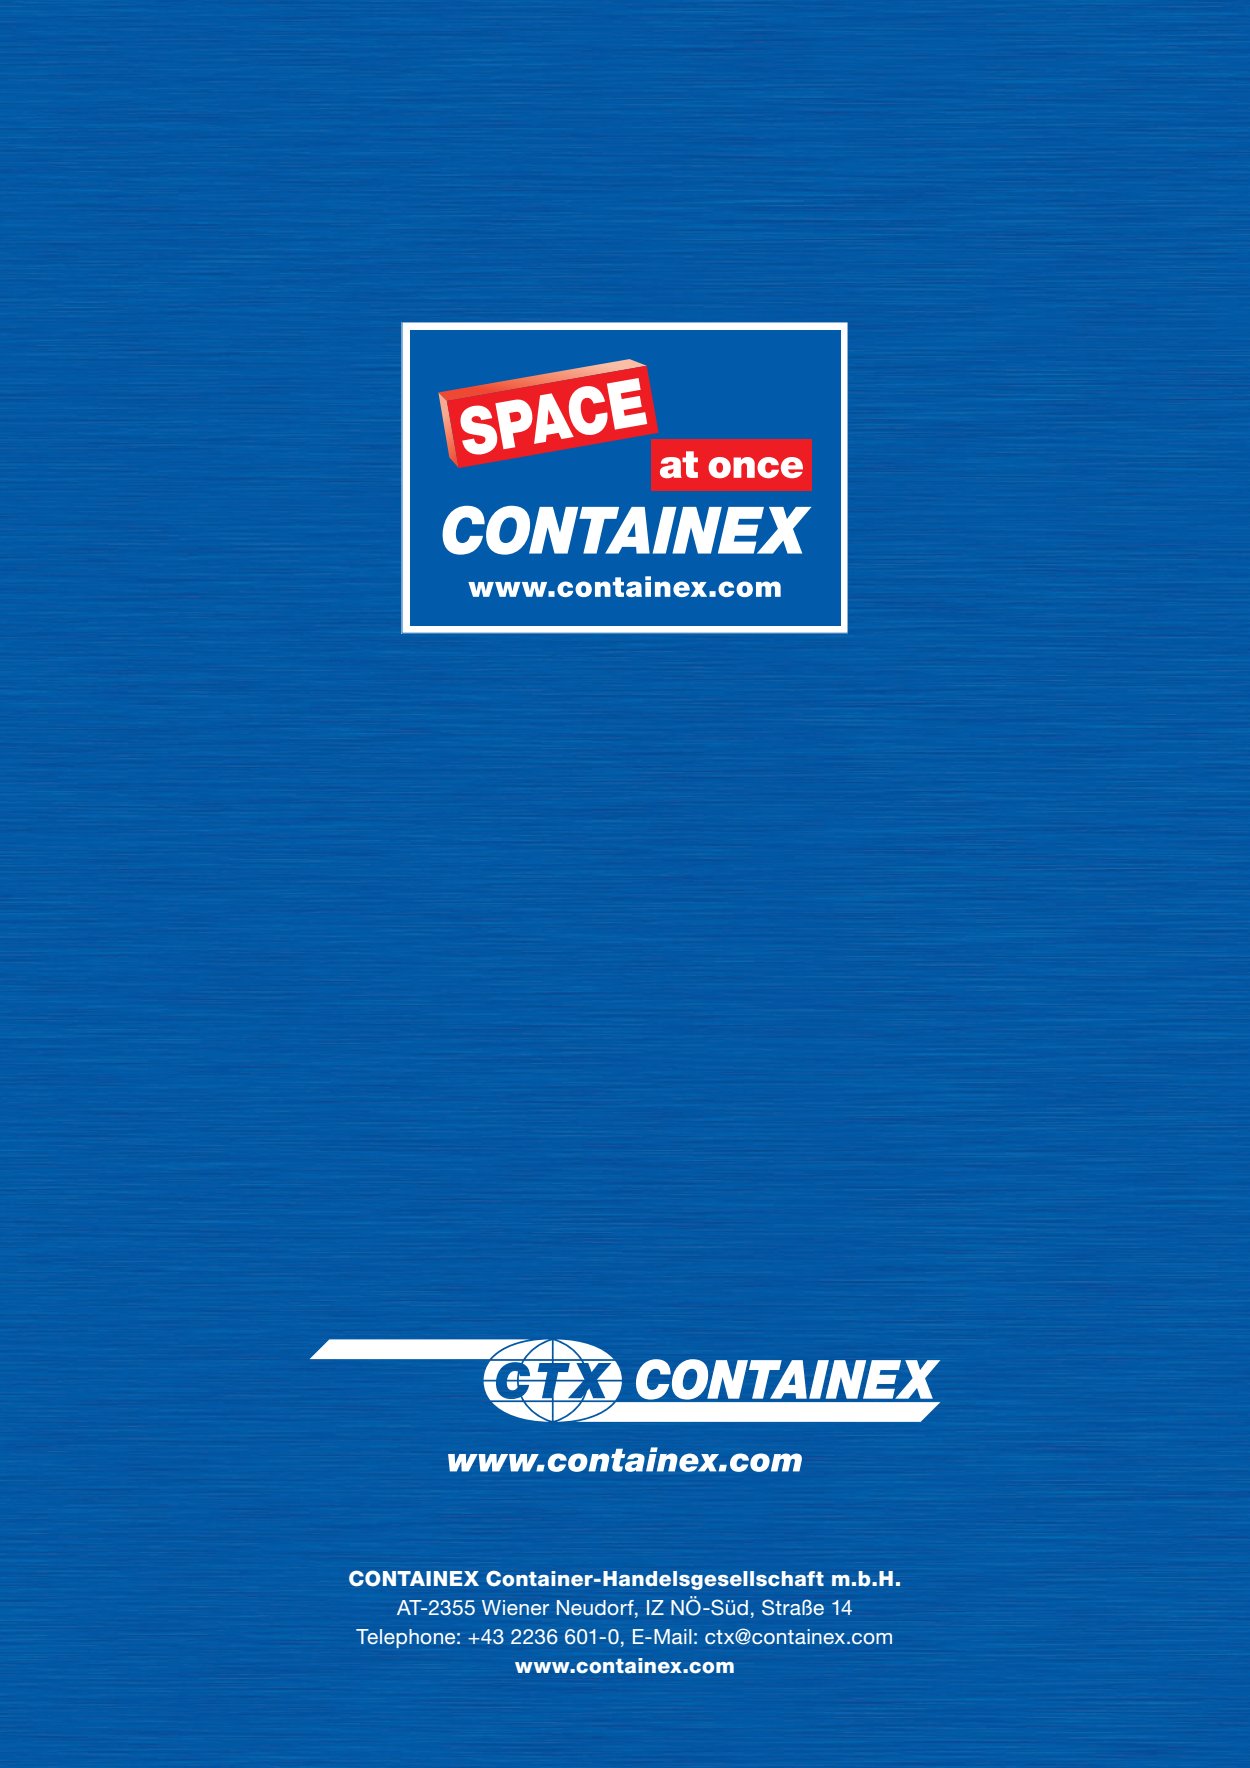 CONTAINEX Container-Handelsgesellschaft Wiener